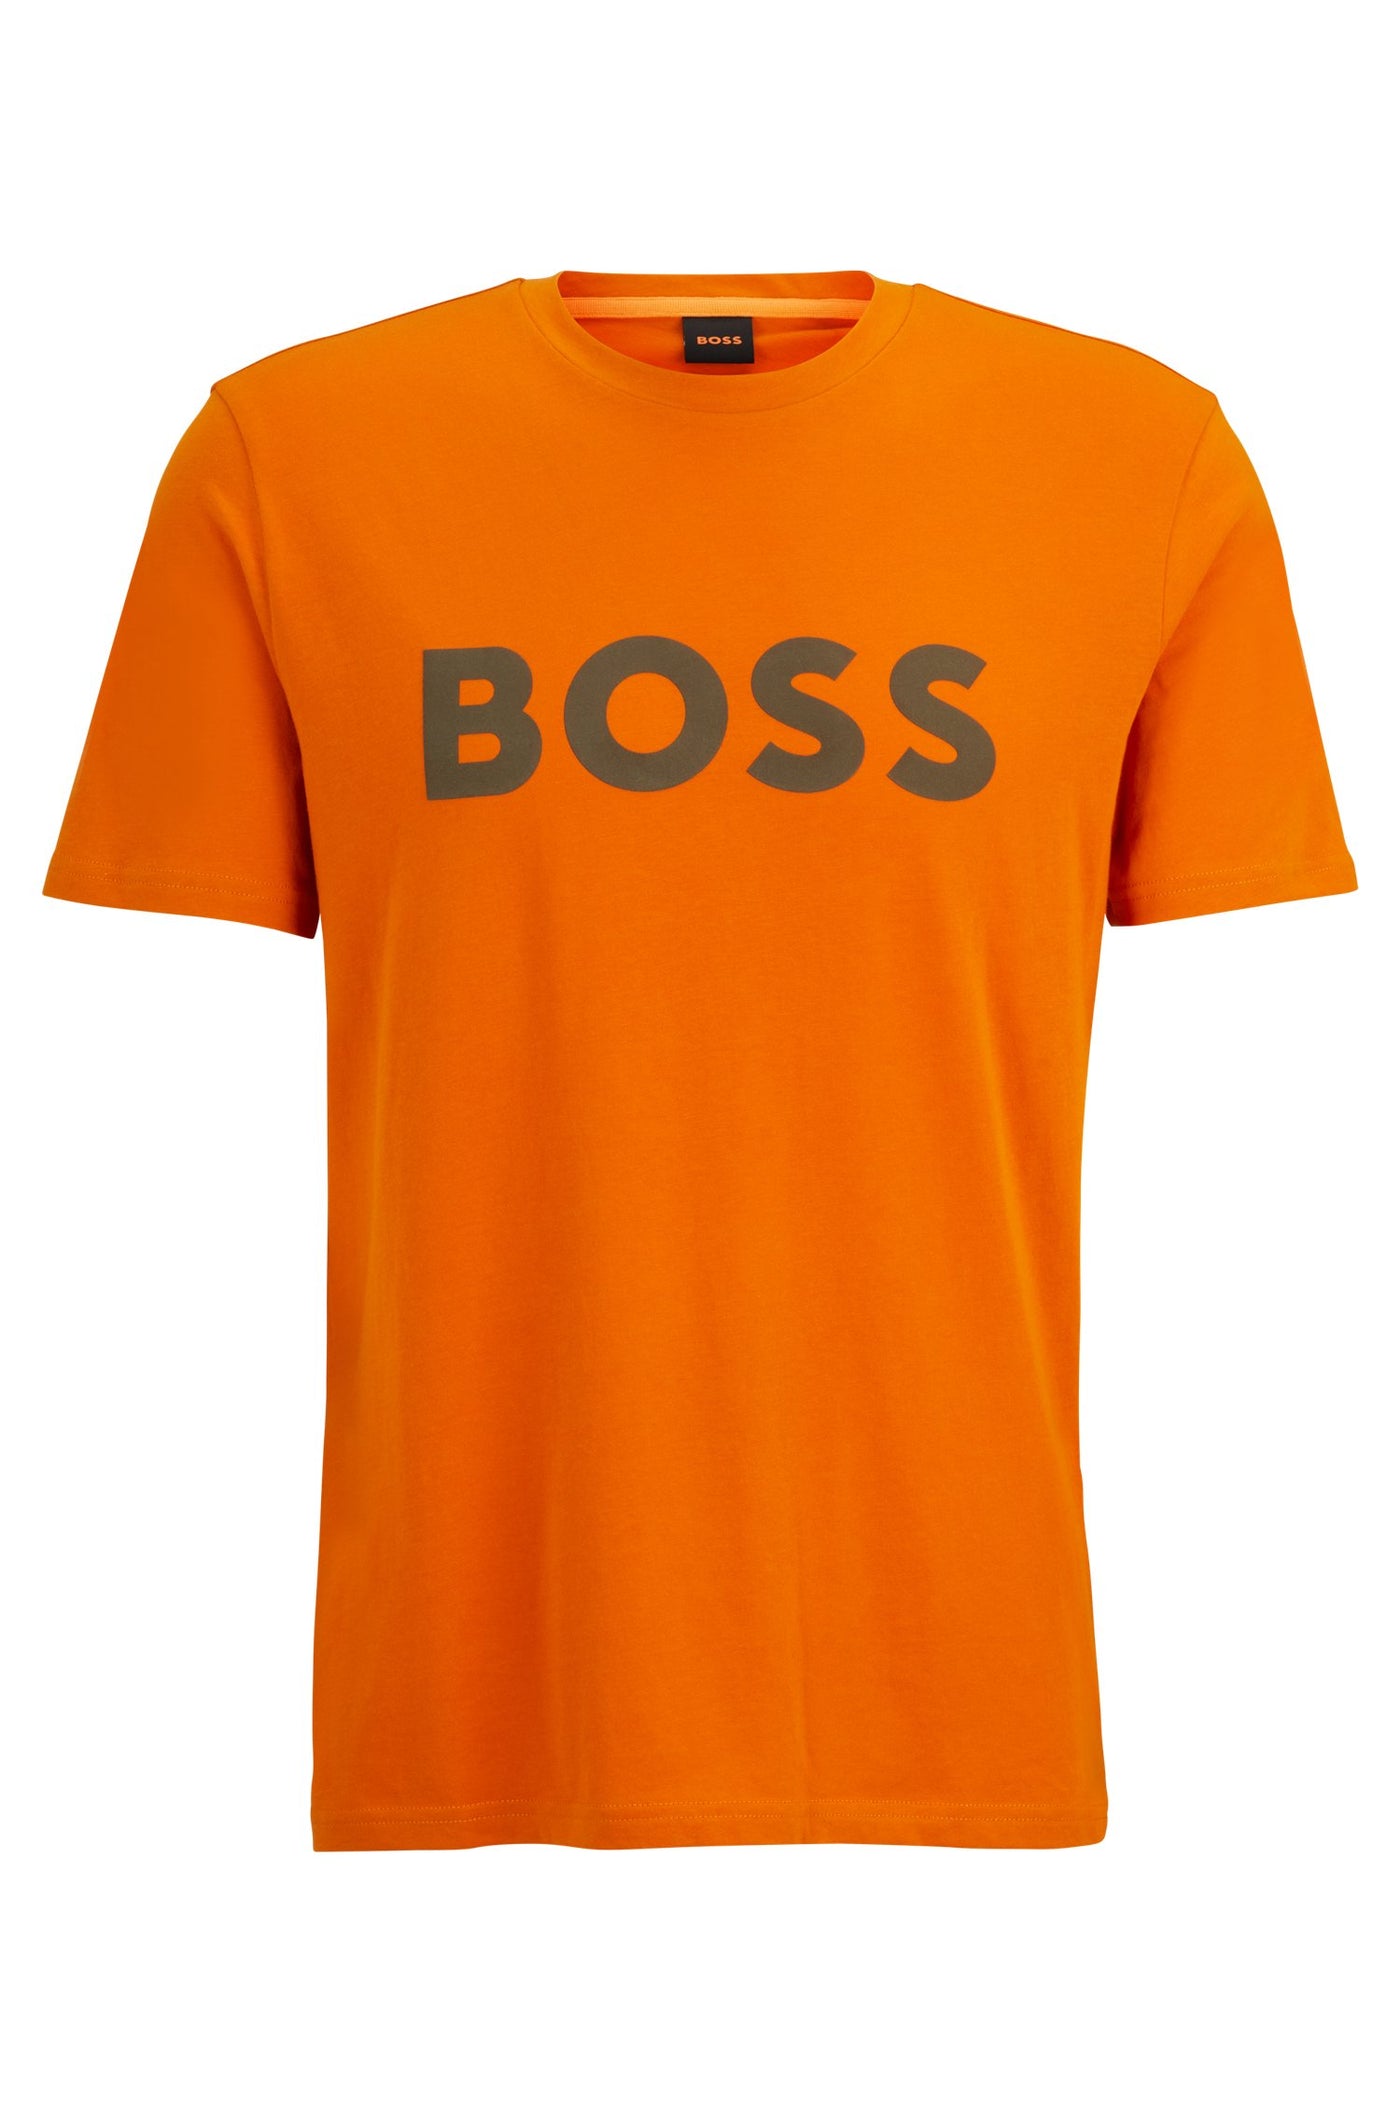 Men's Hugo Boss Thinking 1 T-shirt - Orange